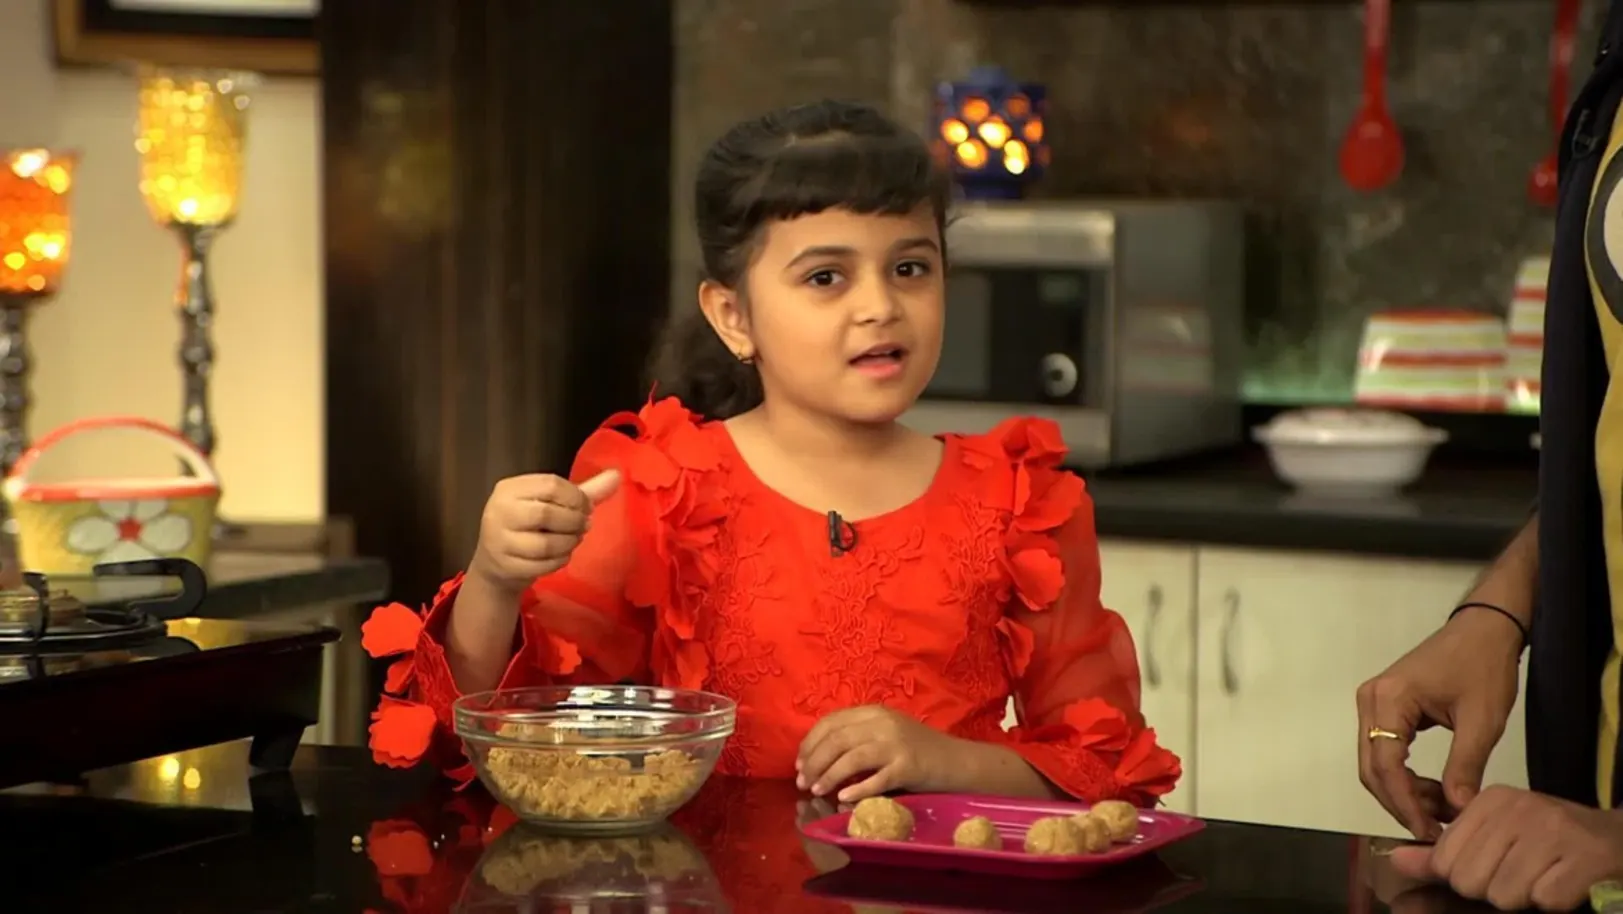 Sankarshan Karhade enjoys little one's company - Aamhi Saare Khavayye - Before TV 